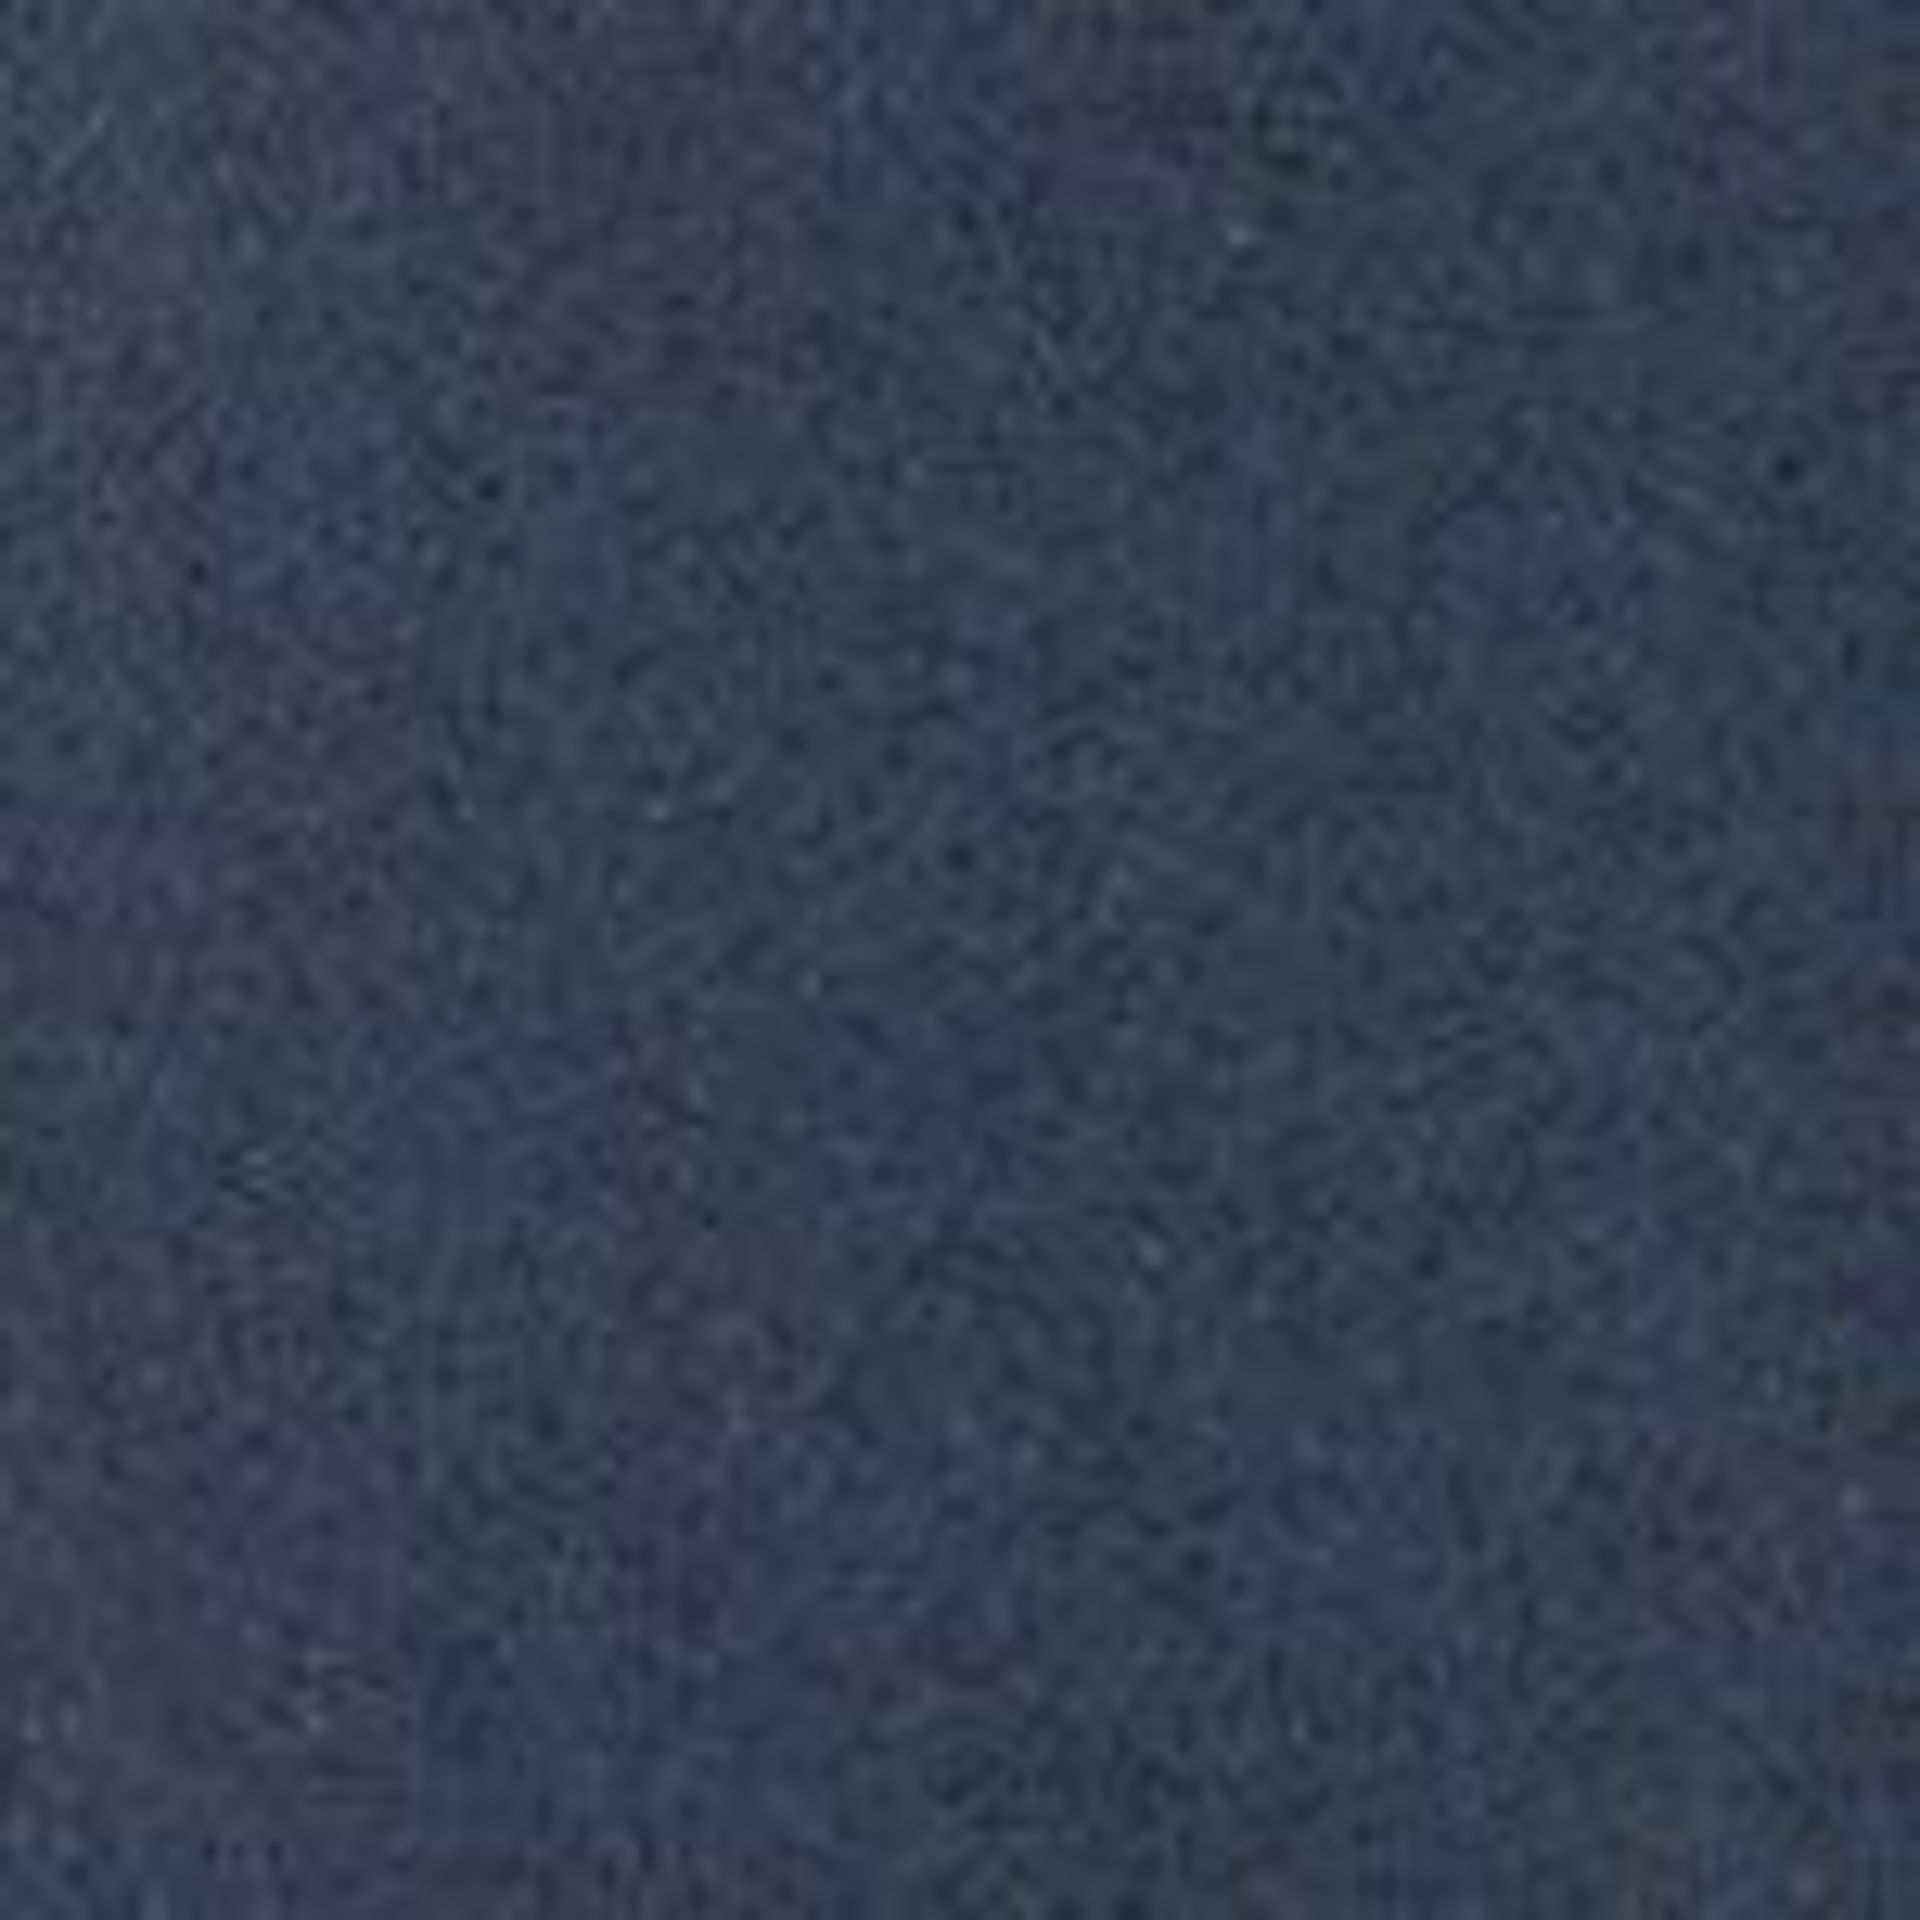 Altro Suprema - Bluebird A stunning, non-sparkle safety floor that gives you complete design